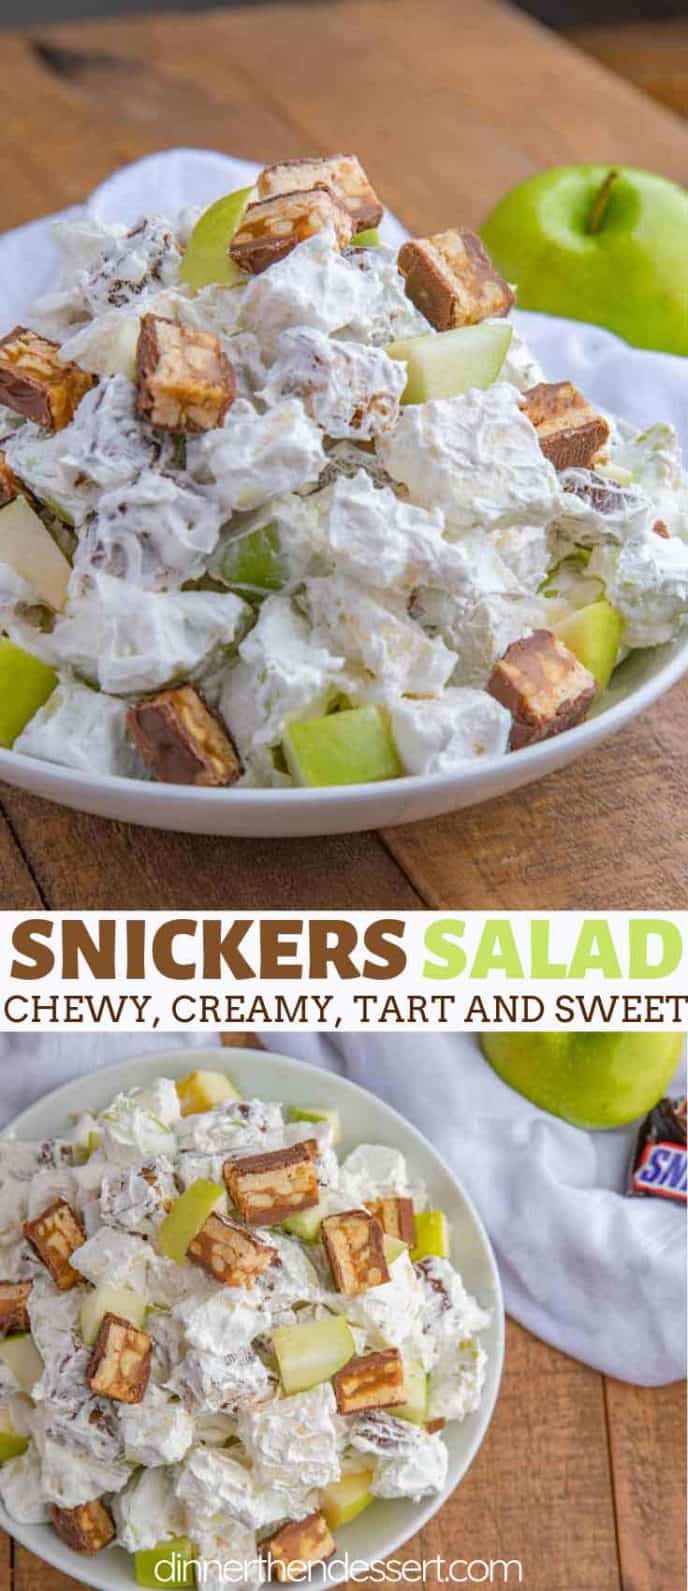 Snickers Dessert Salad